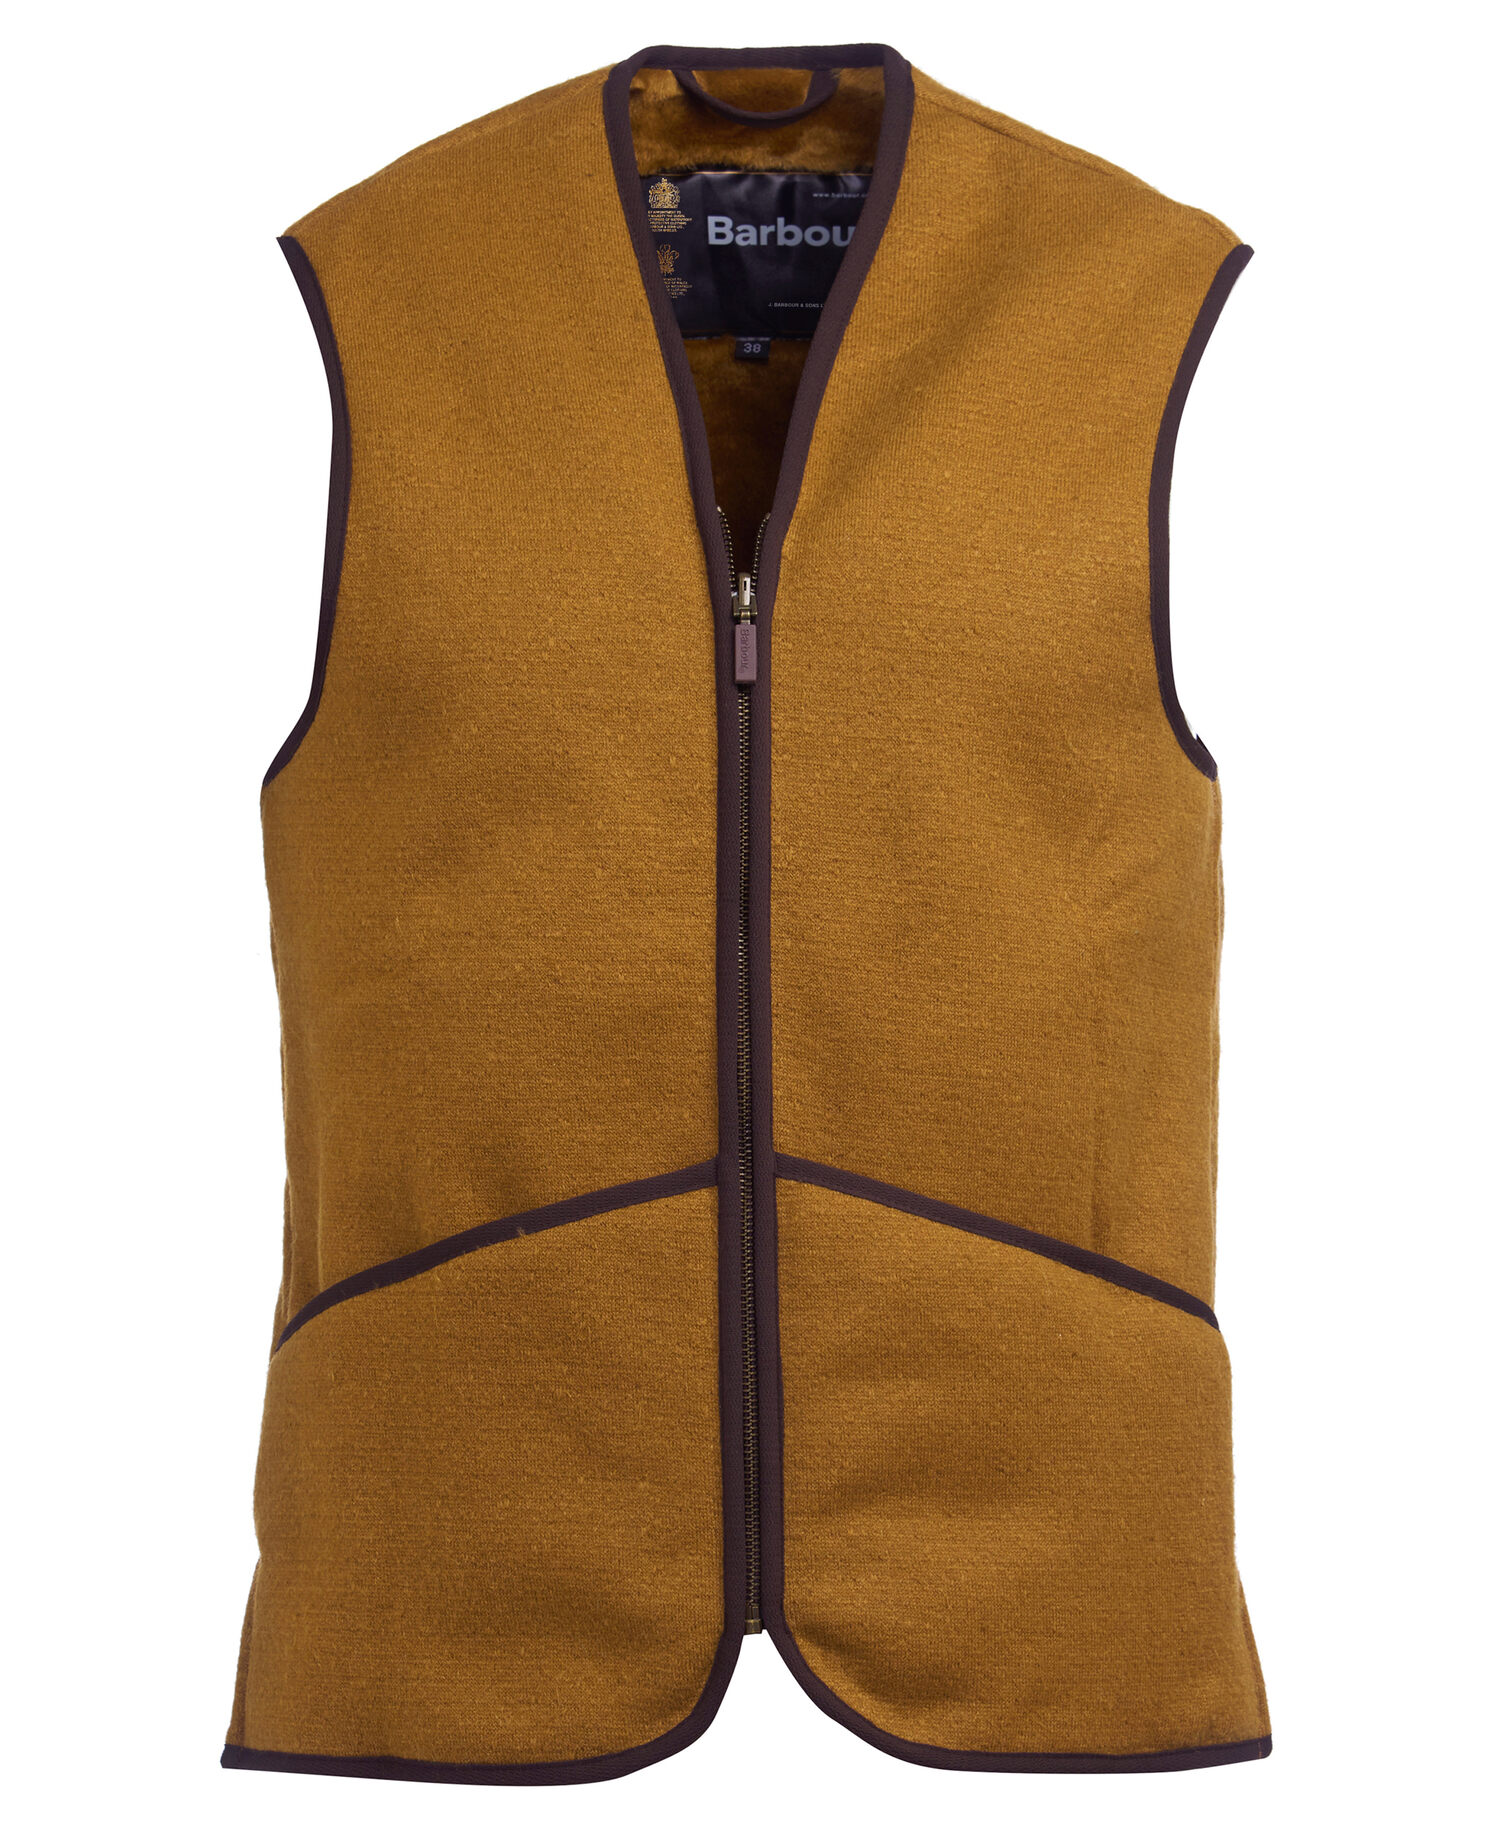 Barbour Beaufort with liner vest size 38